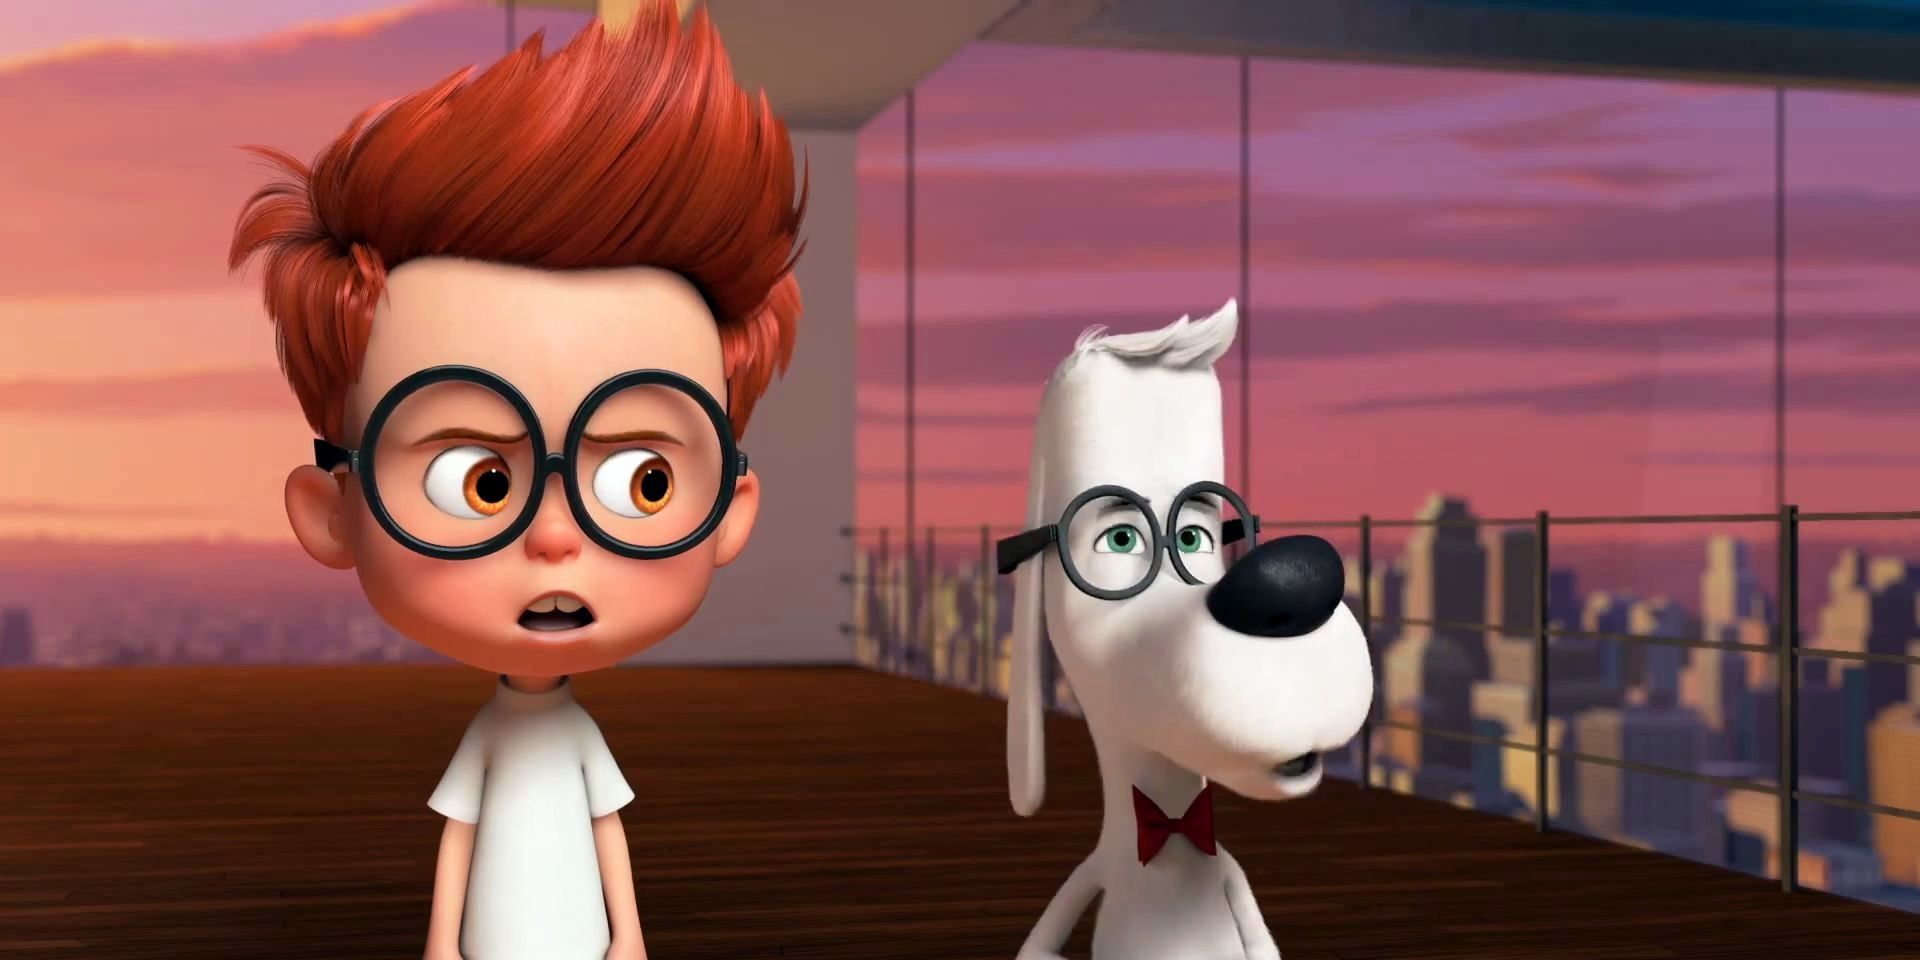 Mr. Peabody and Sherman 2014